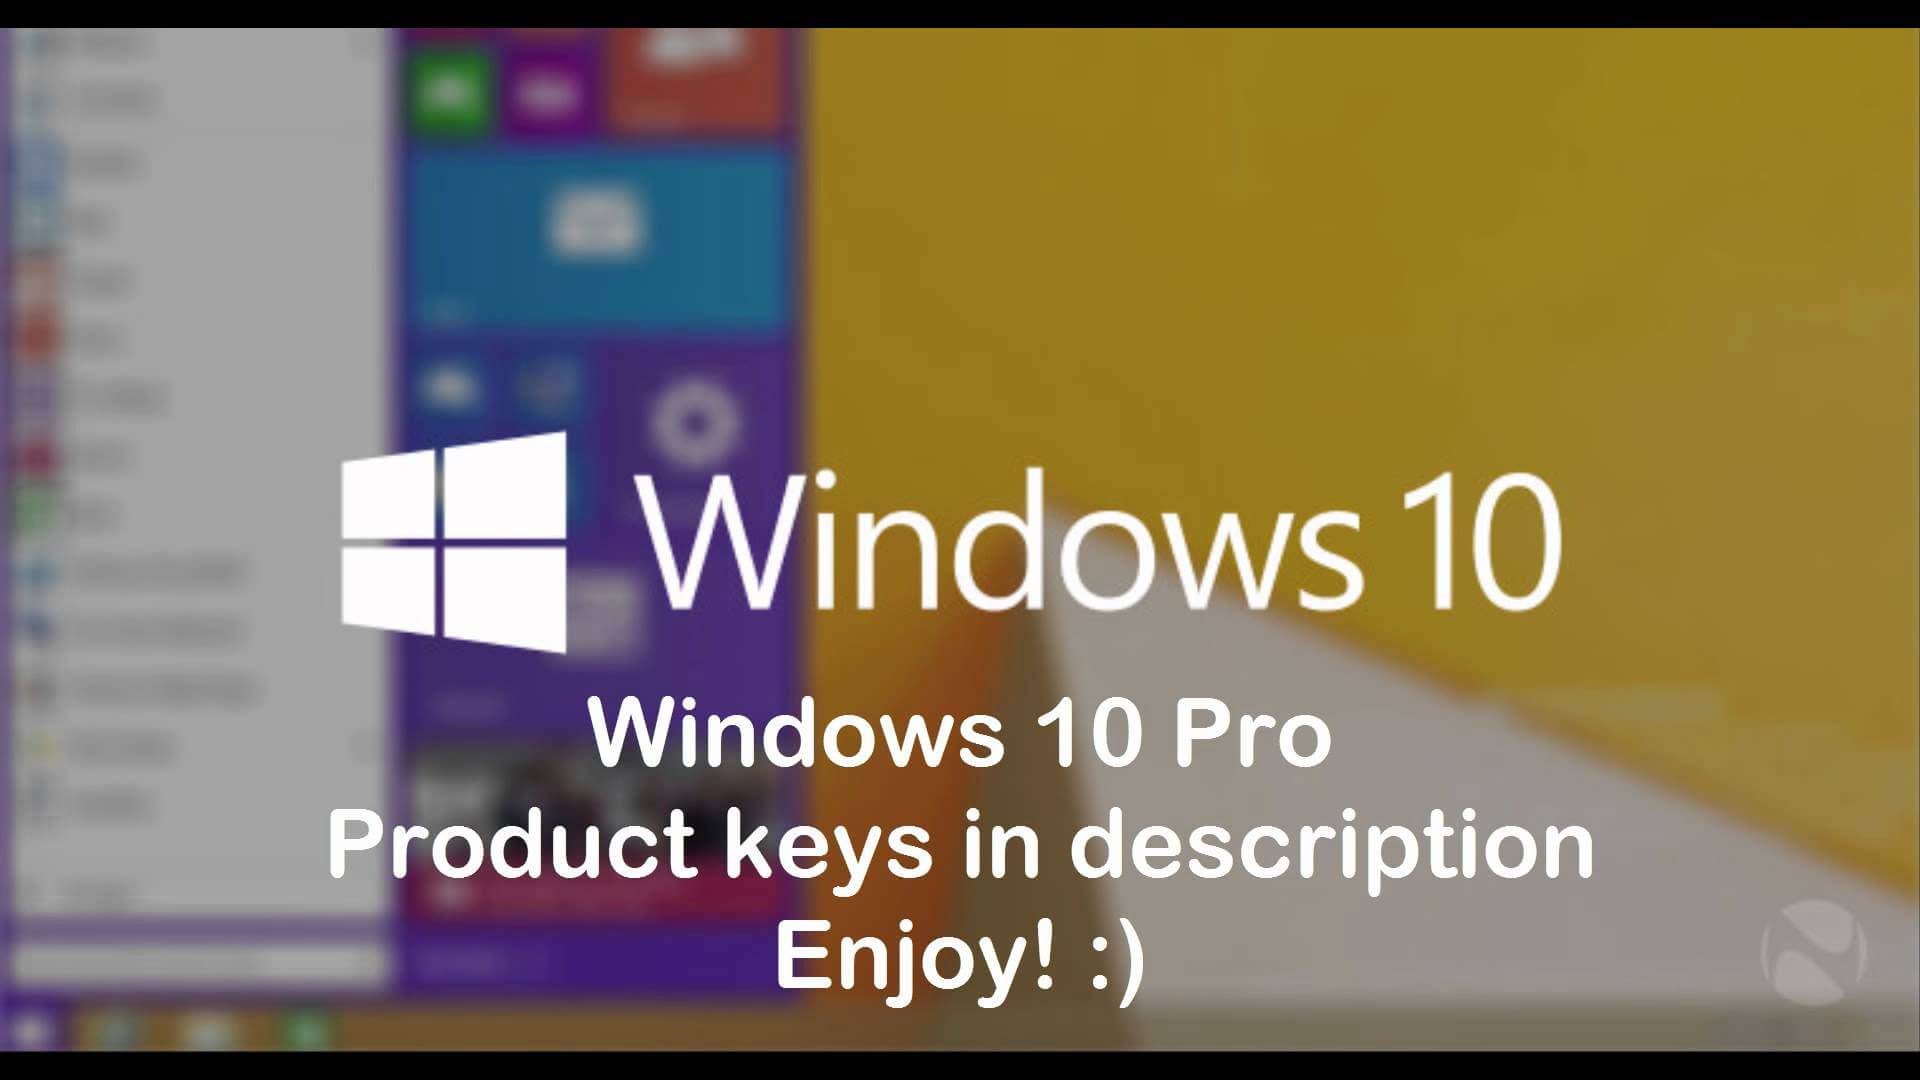 Windows 10 Enterprise 2015 Activation Key Generator